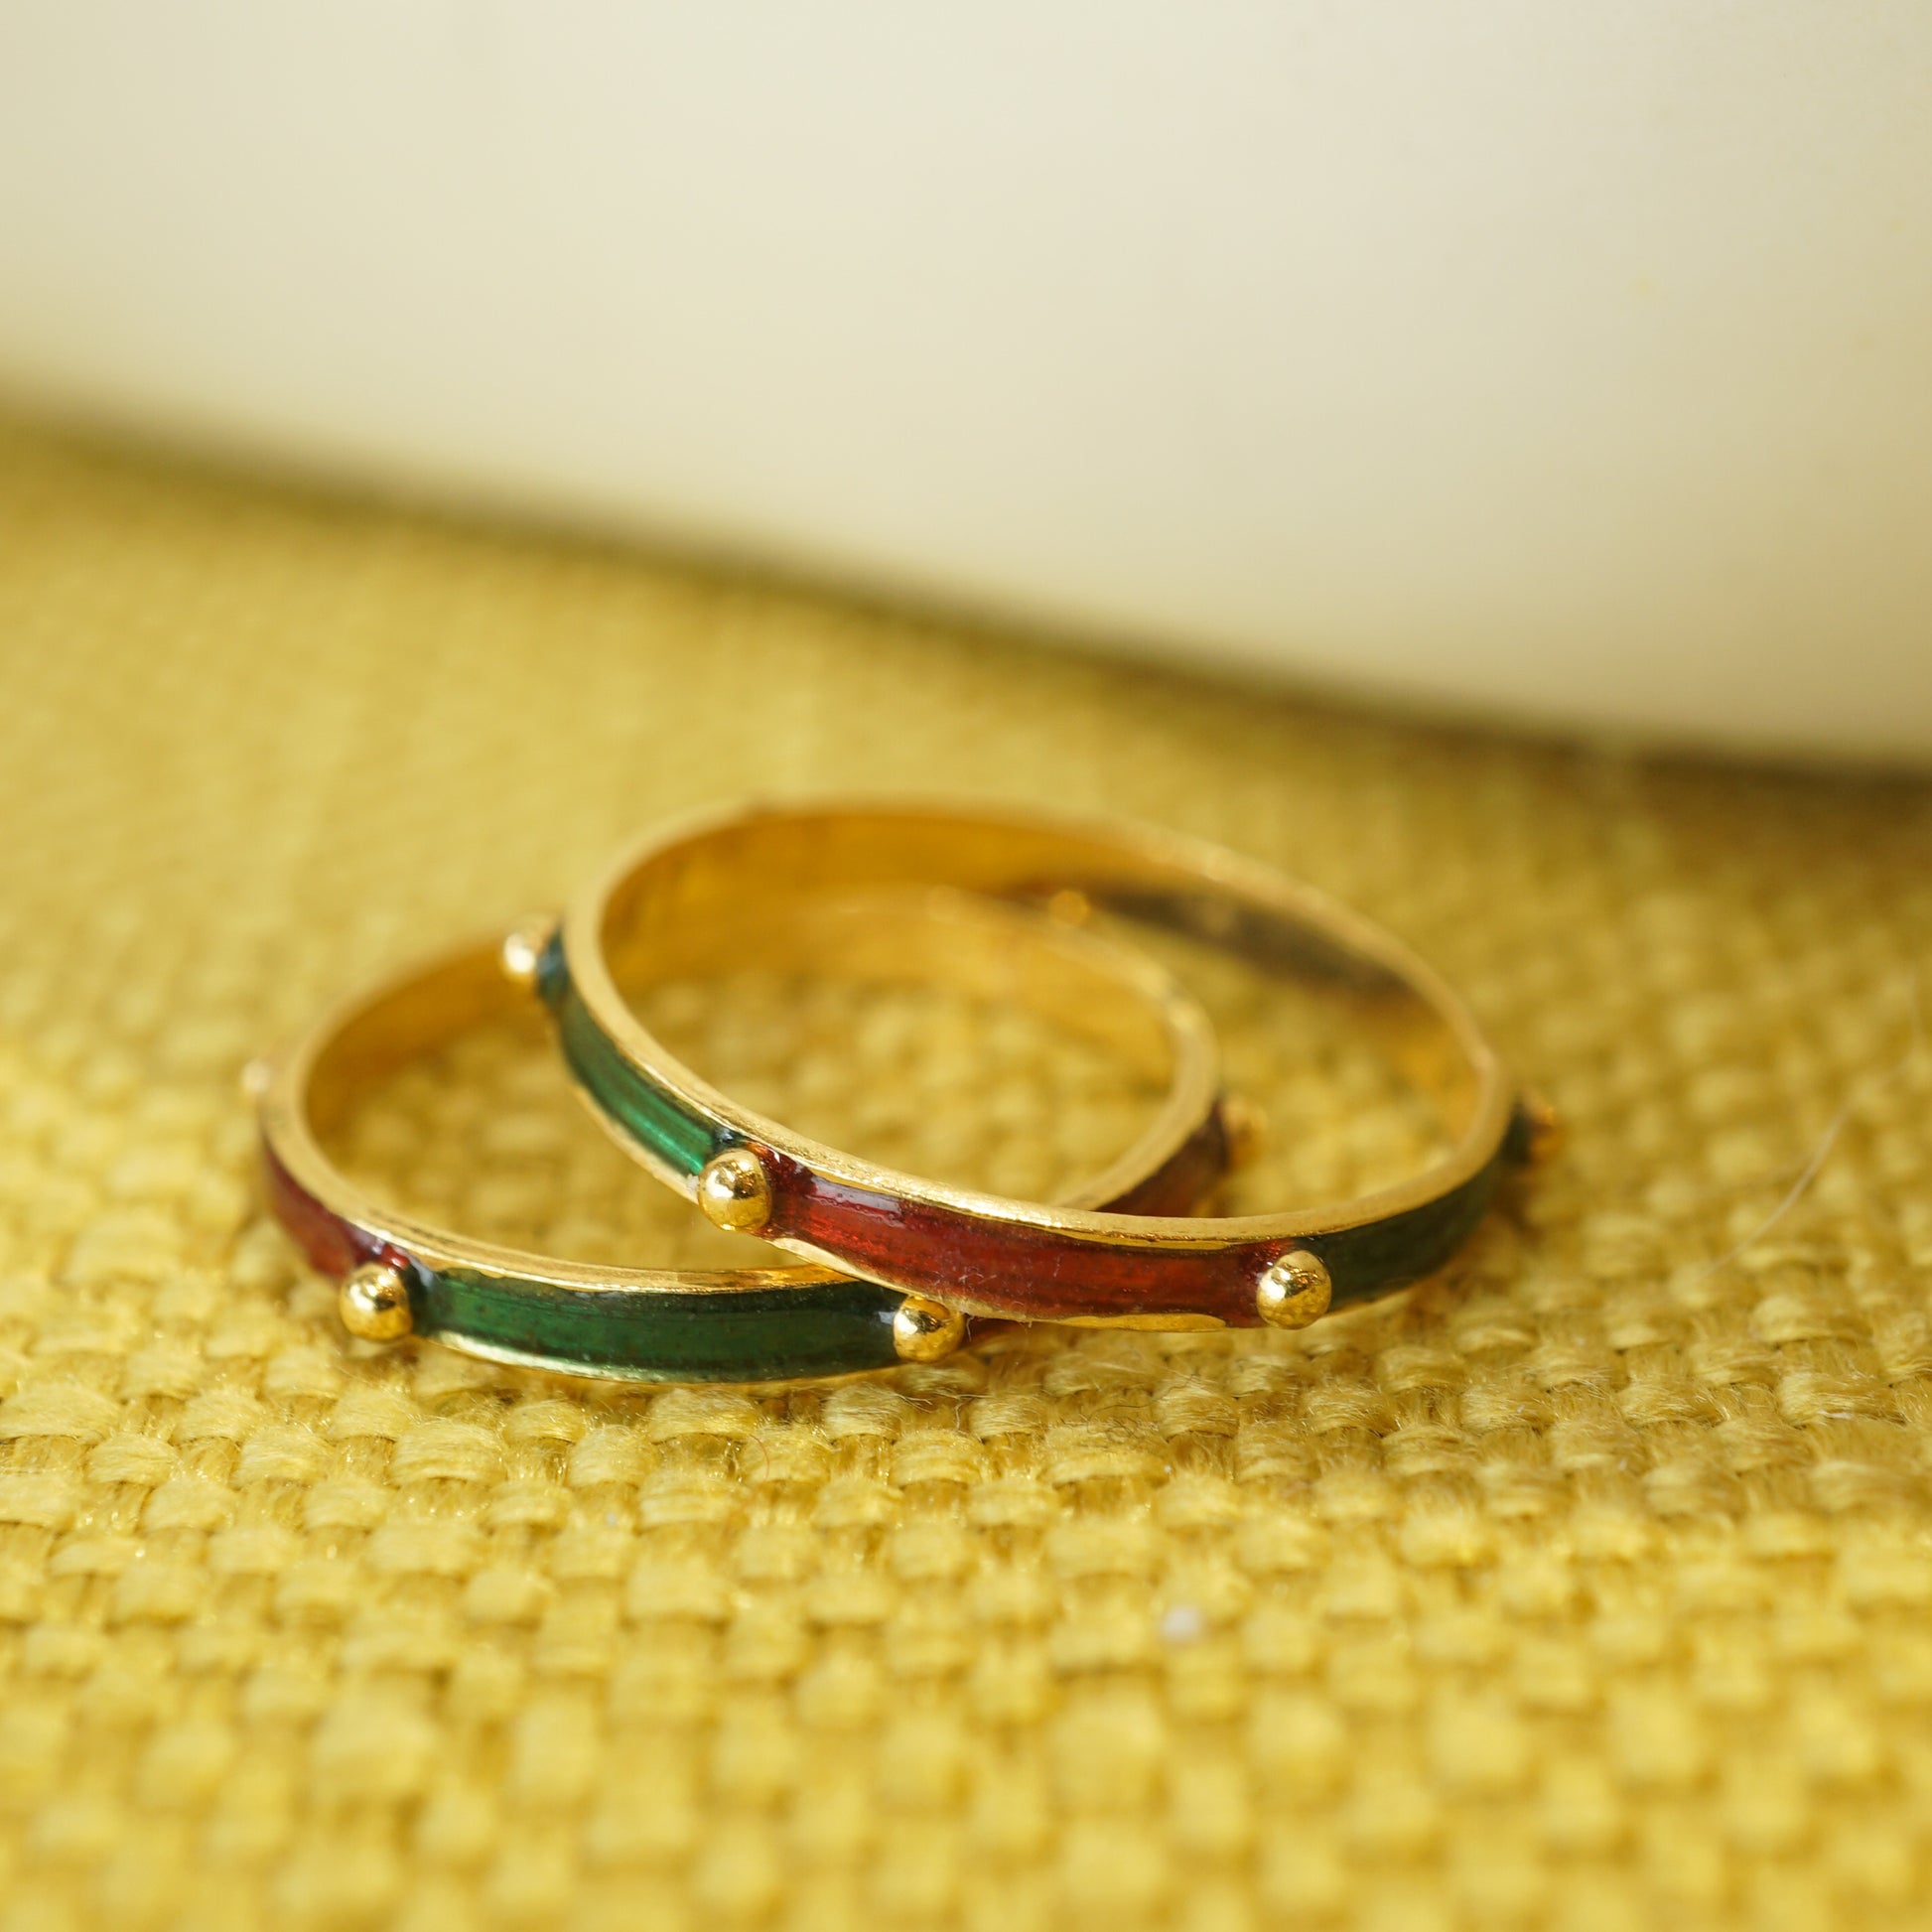 Green & Red Enamel Stacking Ring in 21k Yellow GoldComposition: 21 Karat Yellow GoldRing Size: 7.25Total Gram Weight: 1.3 g